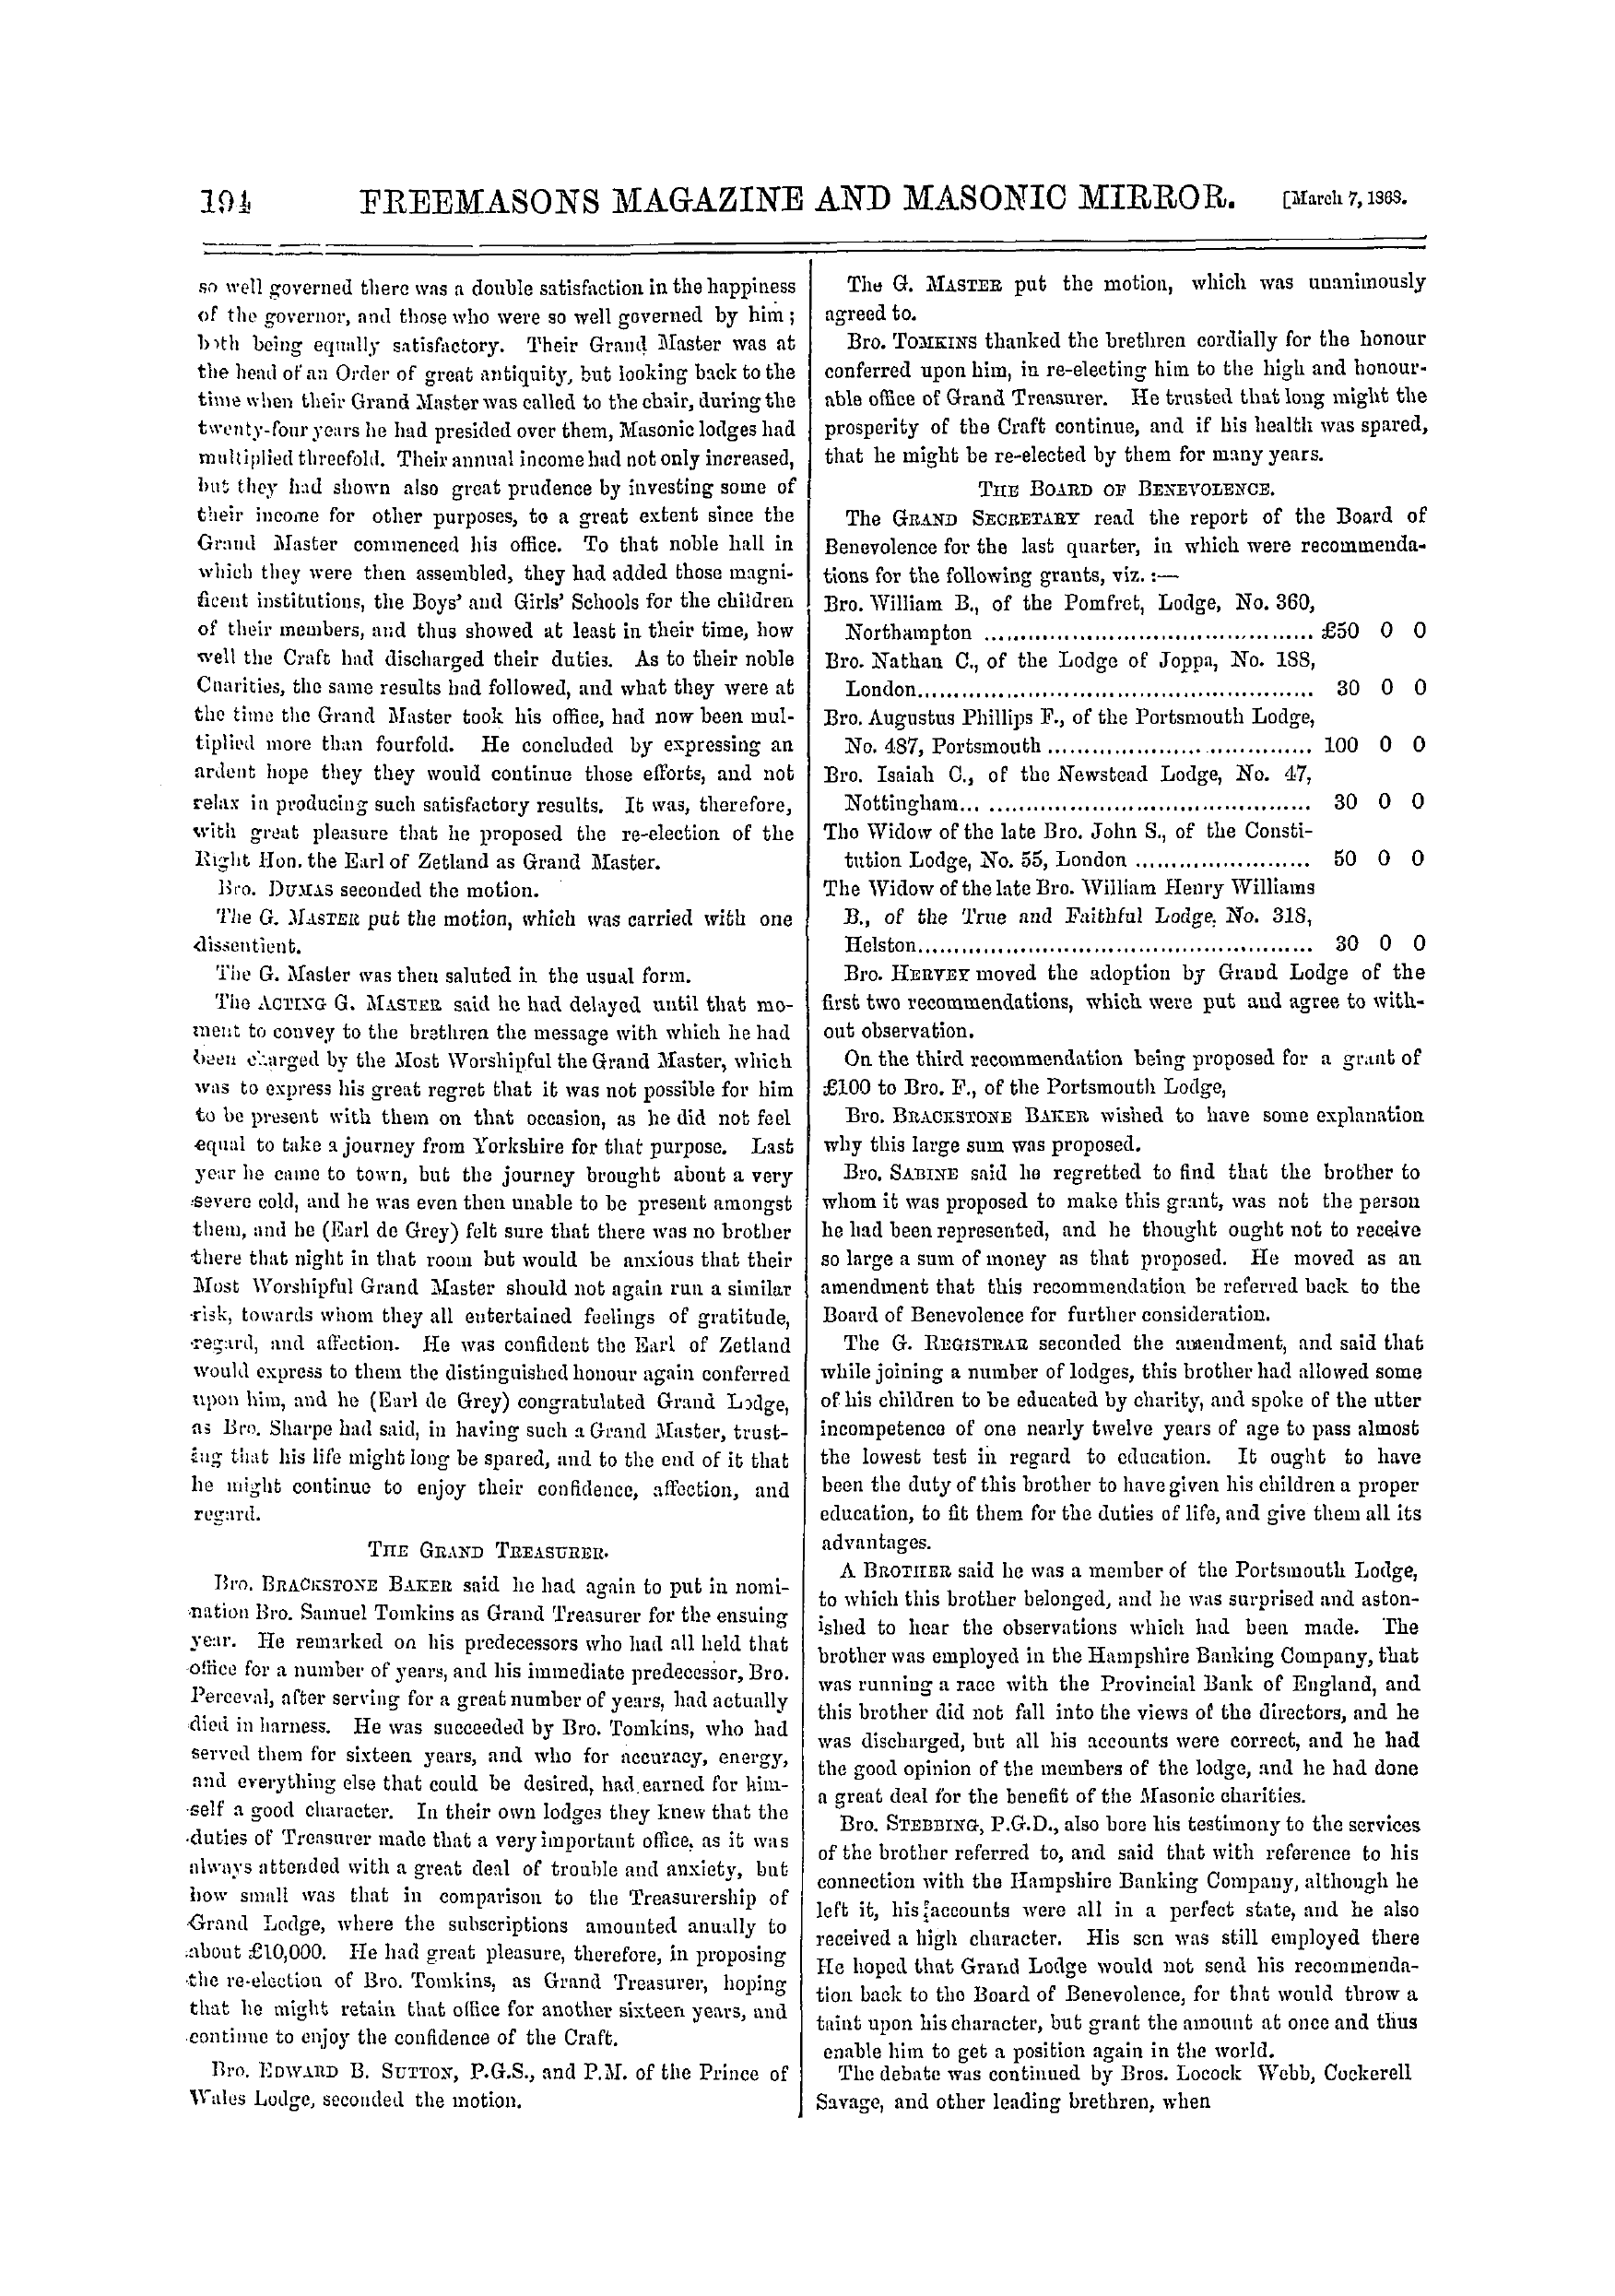 The Freemasons' Monthly Magazine: 1868-03-07 - Grand Lodge.